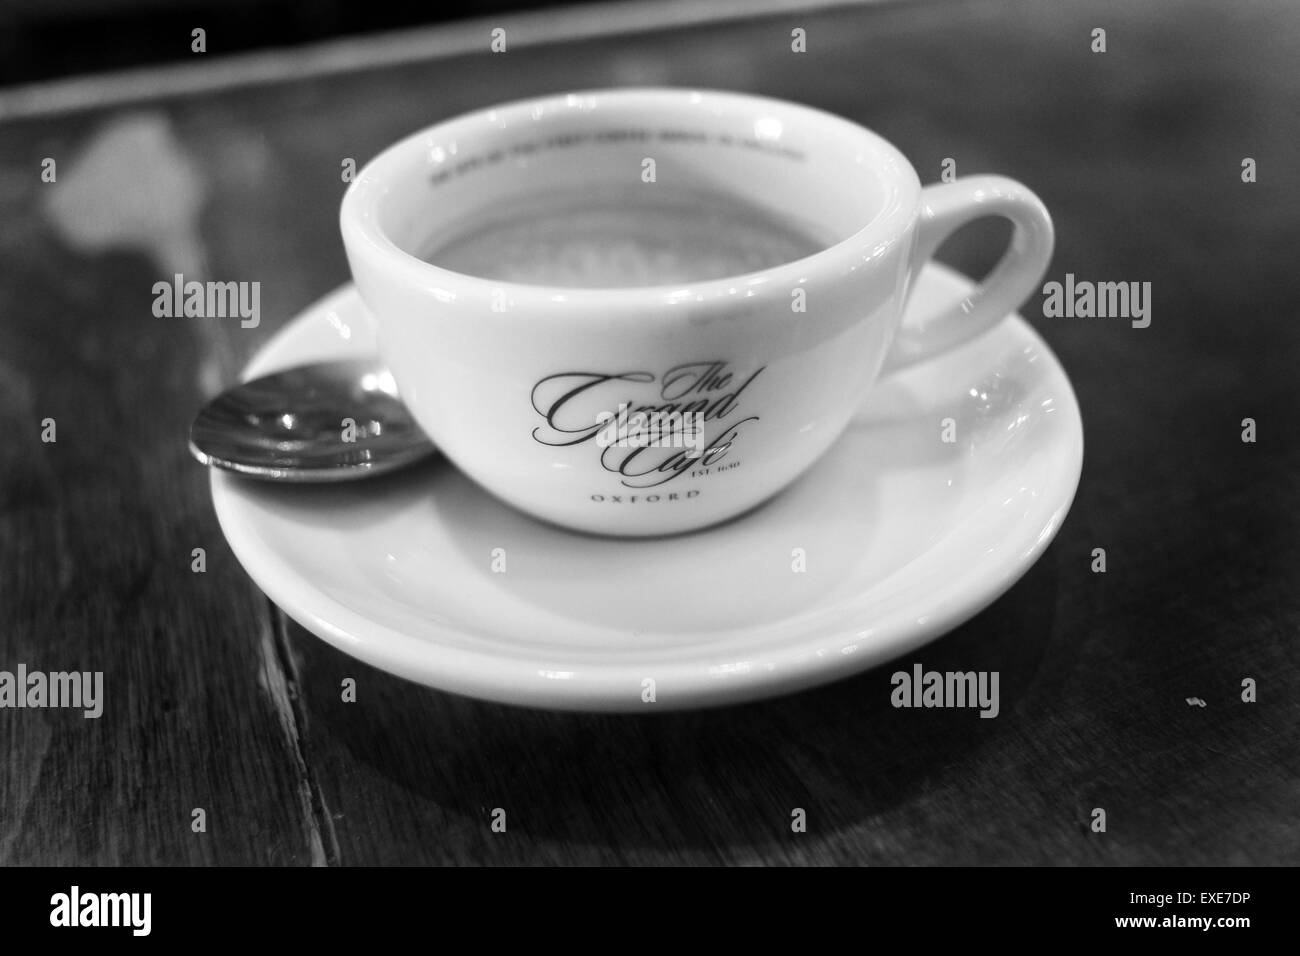 Espresso Coffee Cup from the Grand Café Oxford Stock Photo